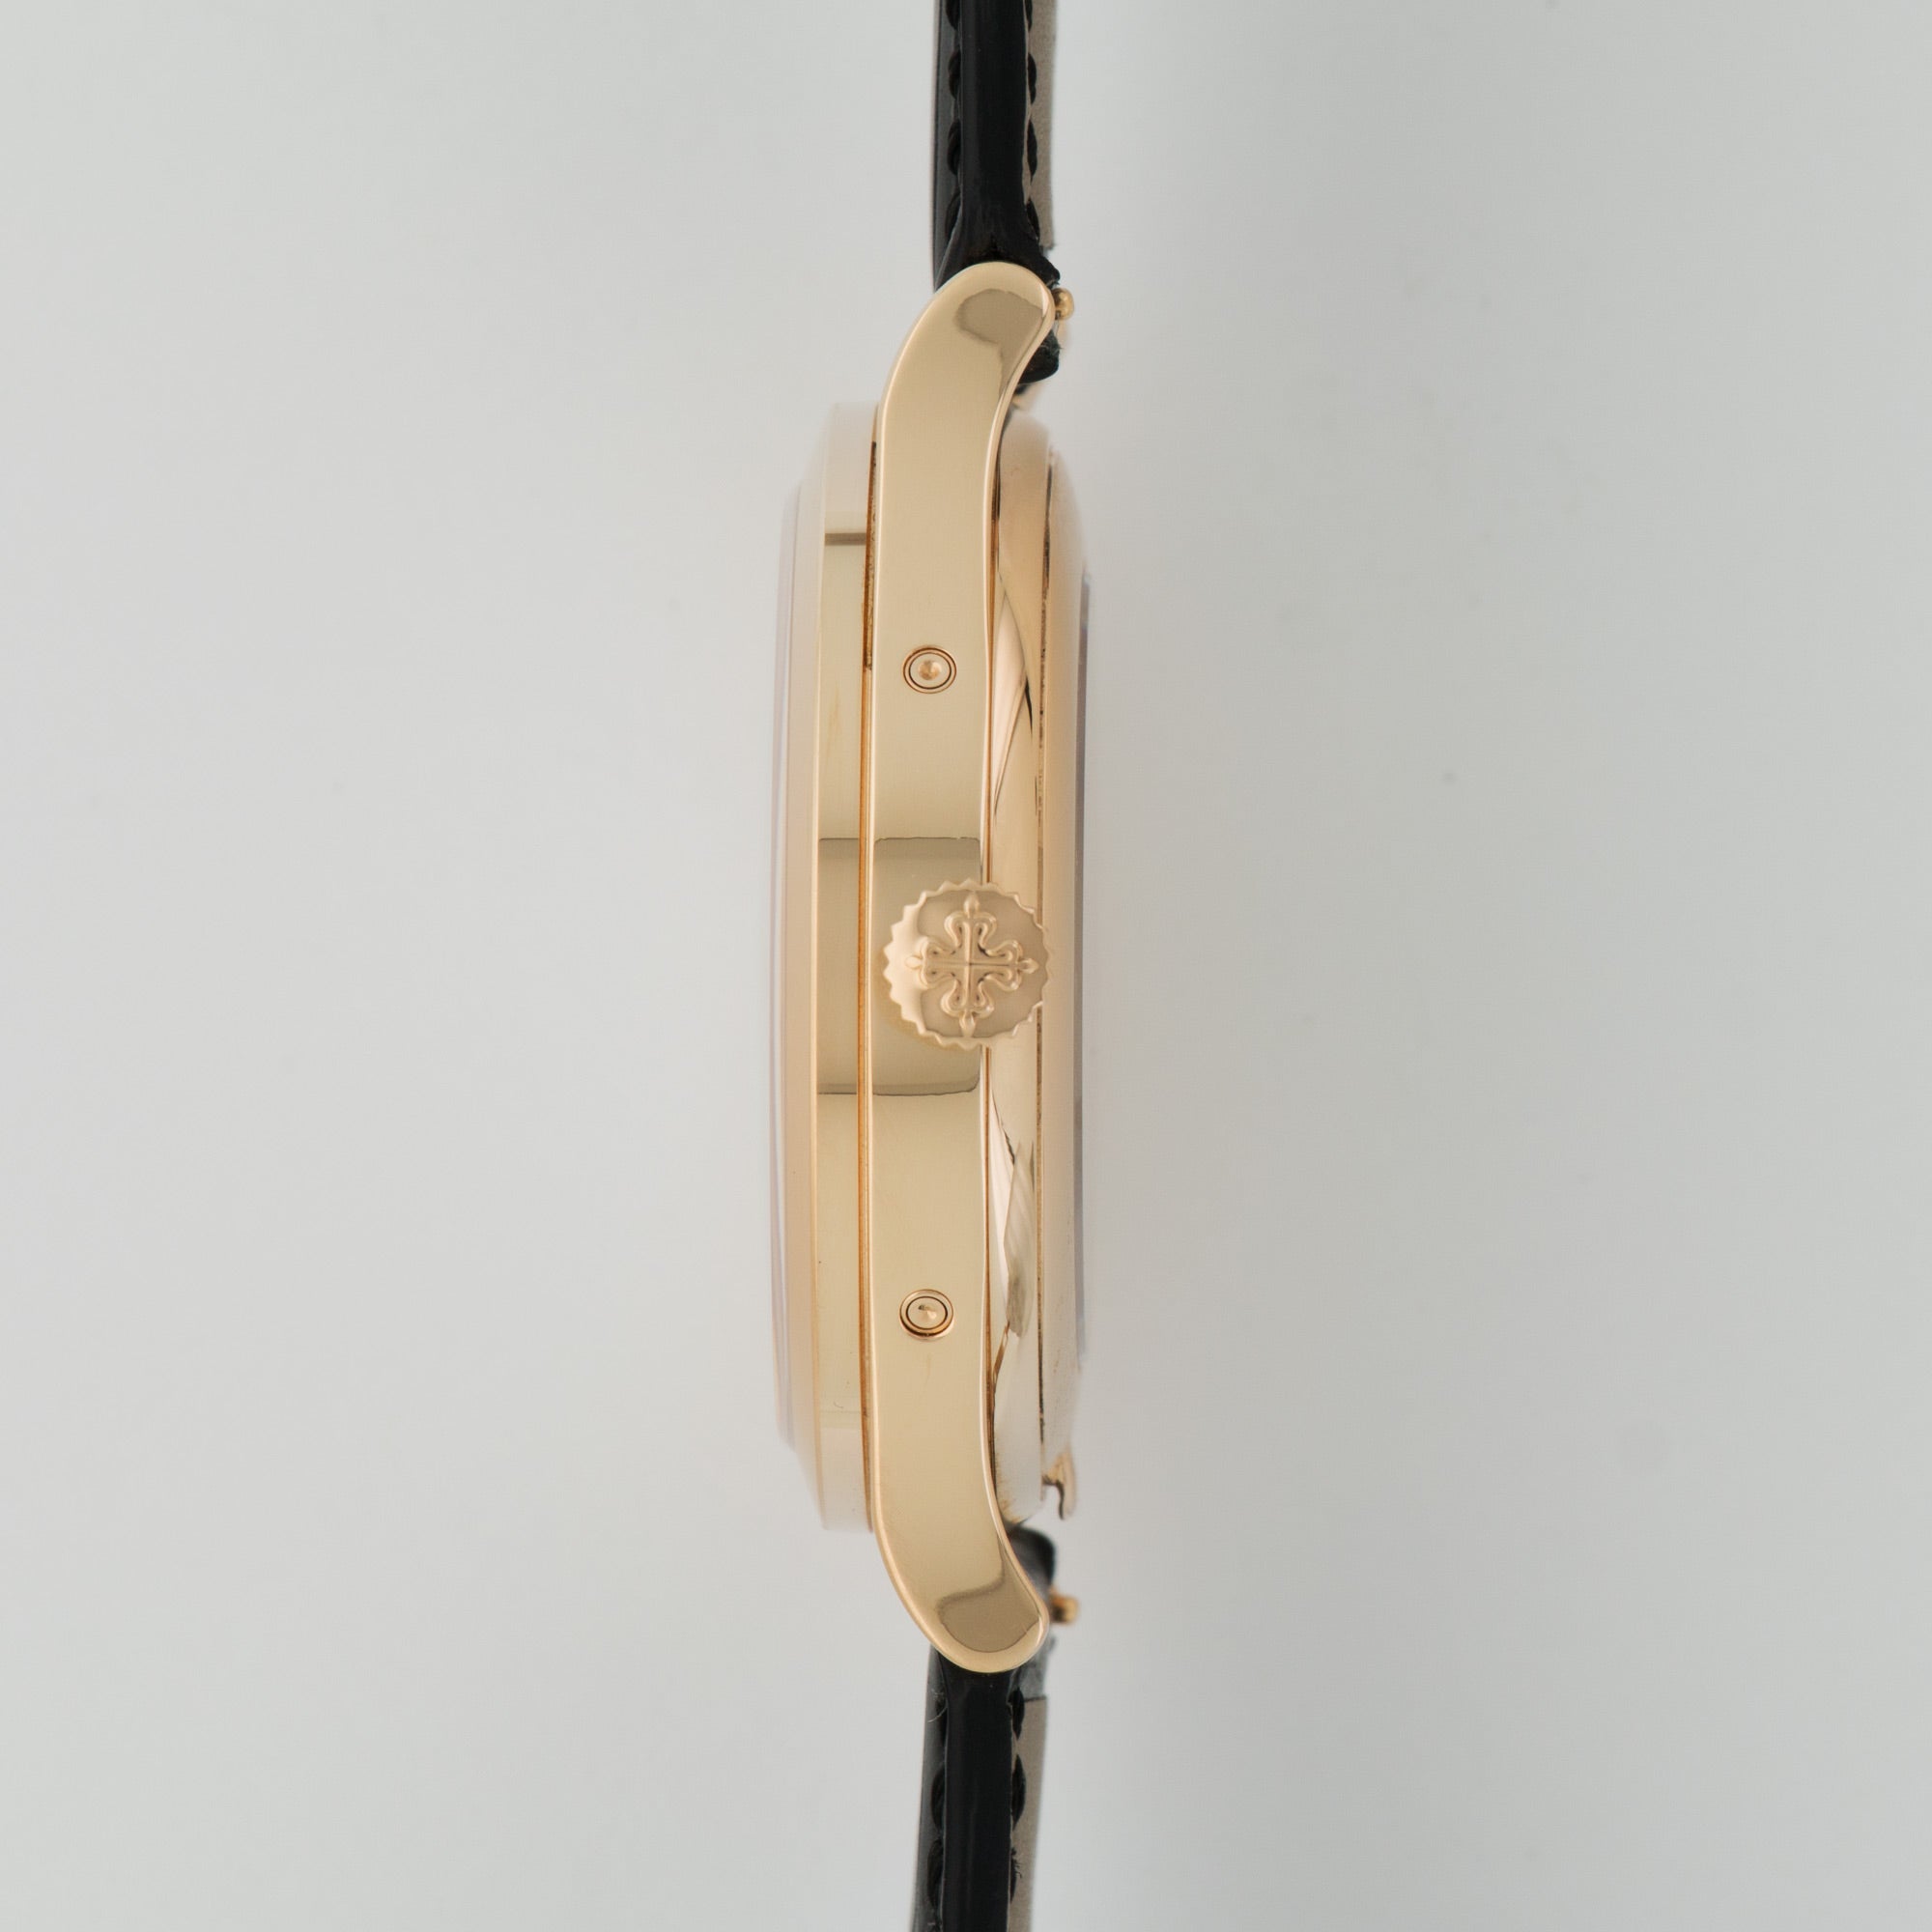 Patek Philippe - Patek Philippe Rose Gold Annual Calendar Watch Ref. 5396R - The Keystone Watches